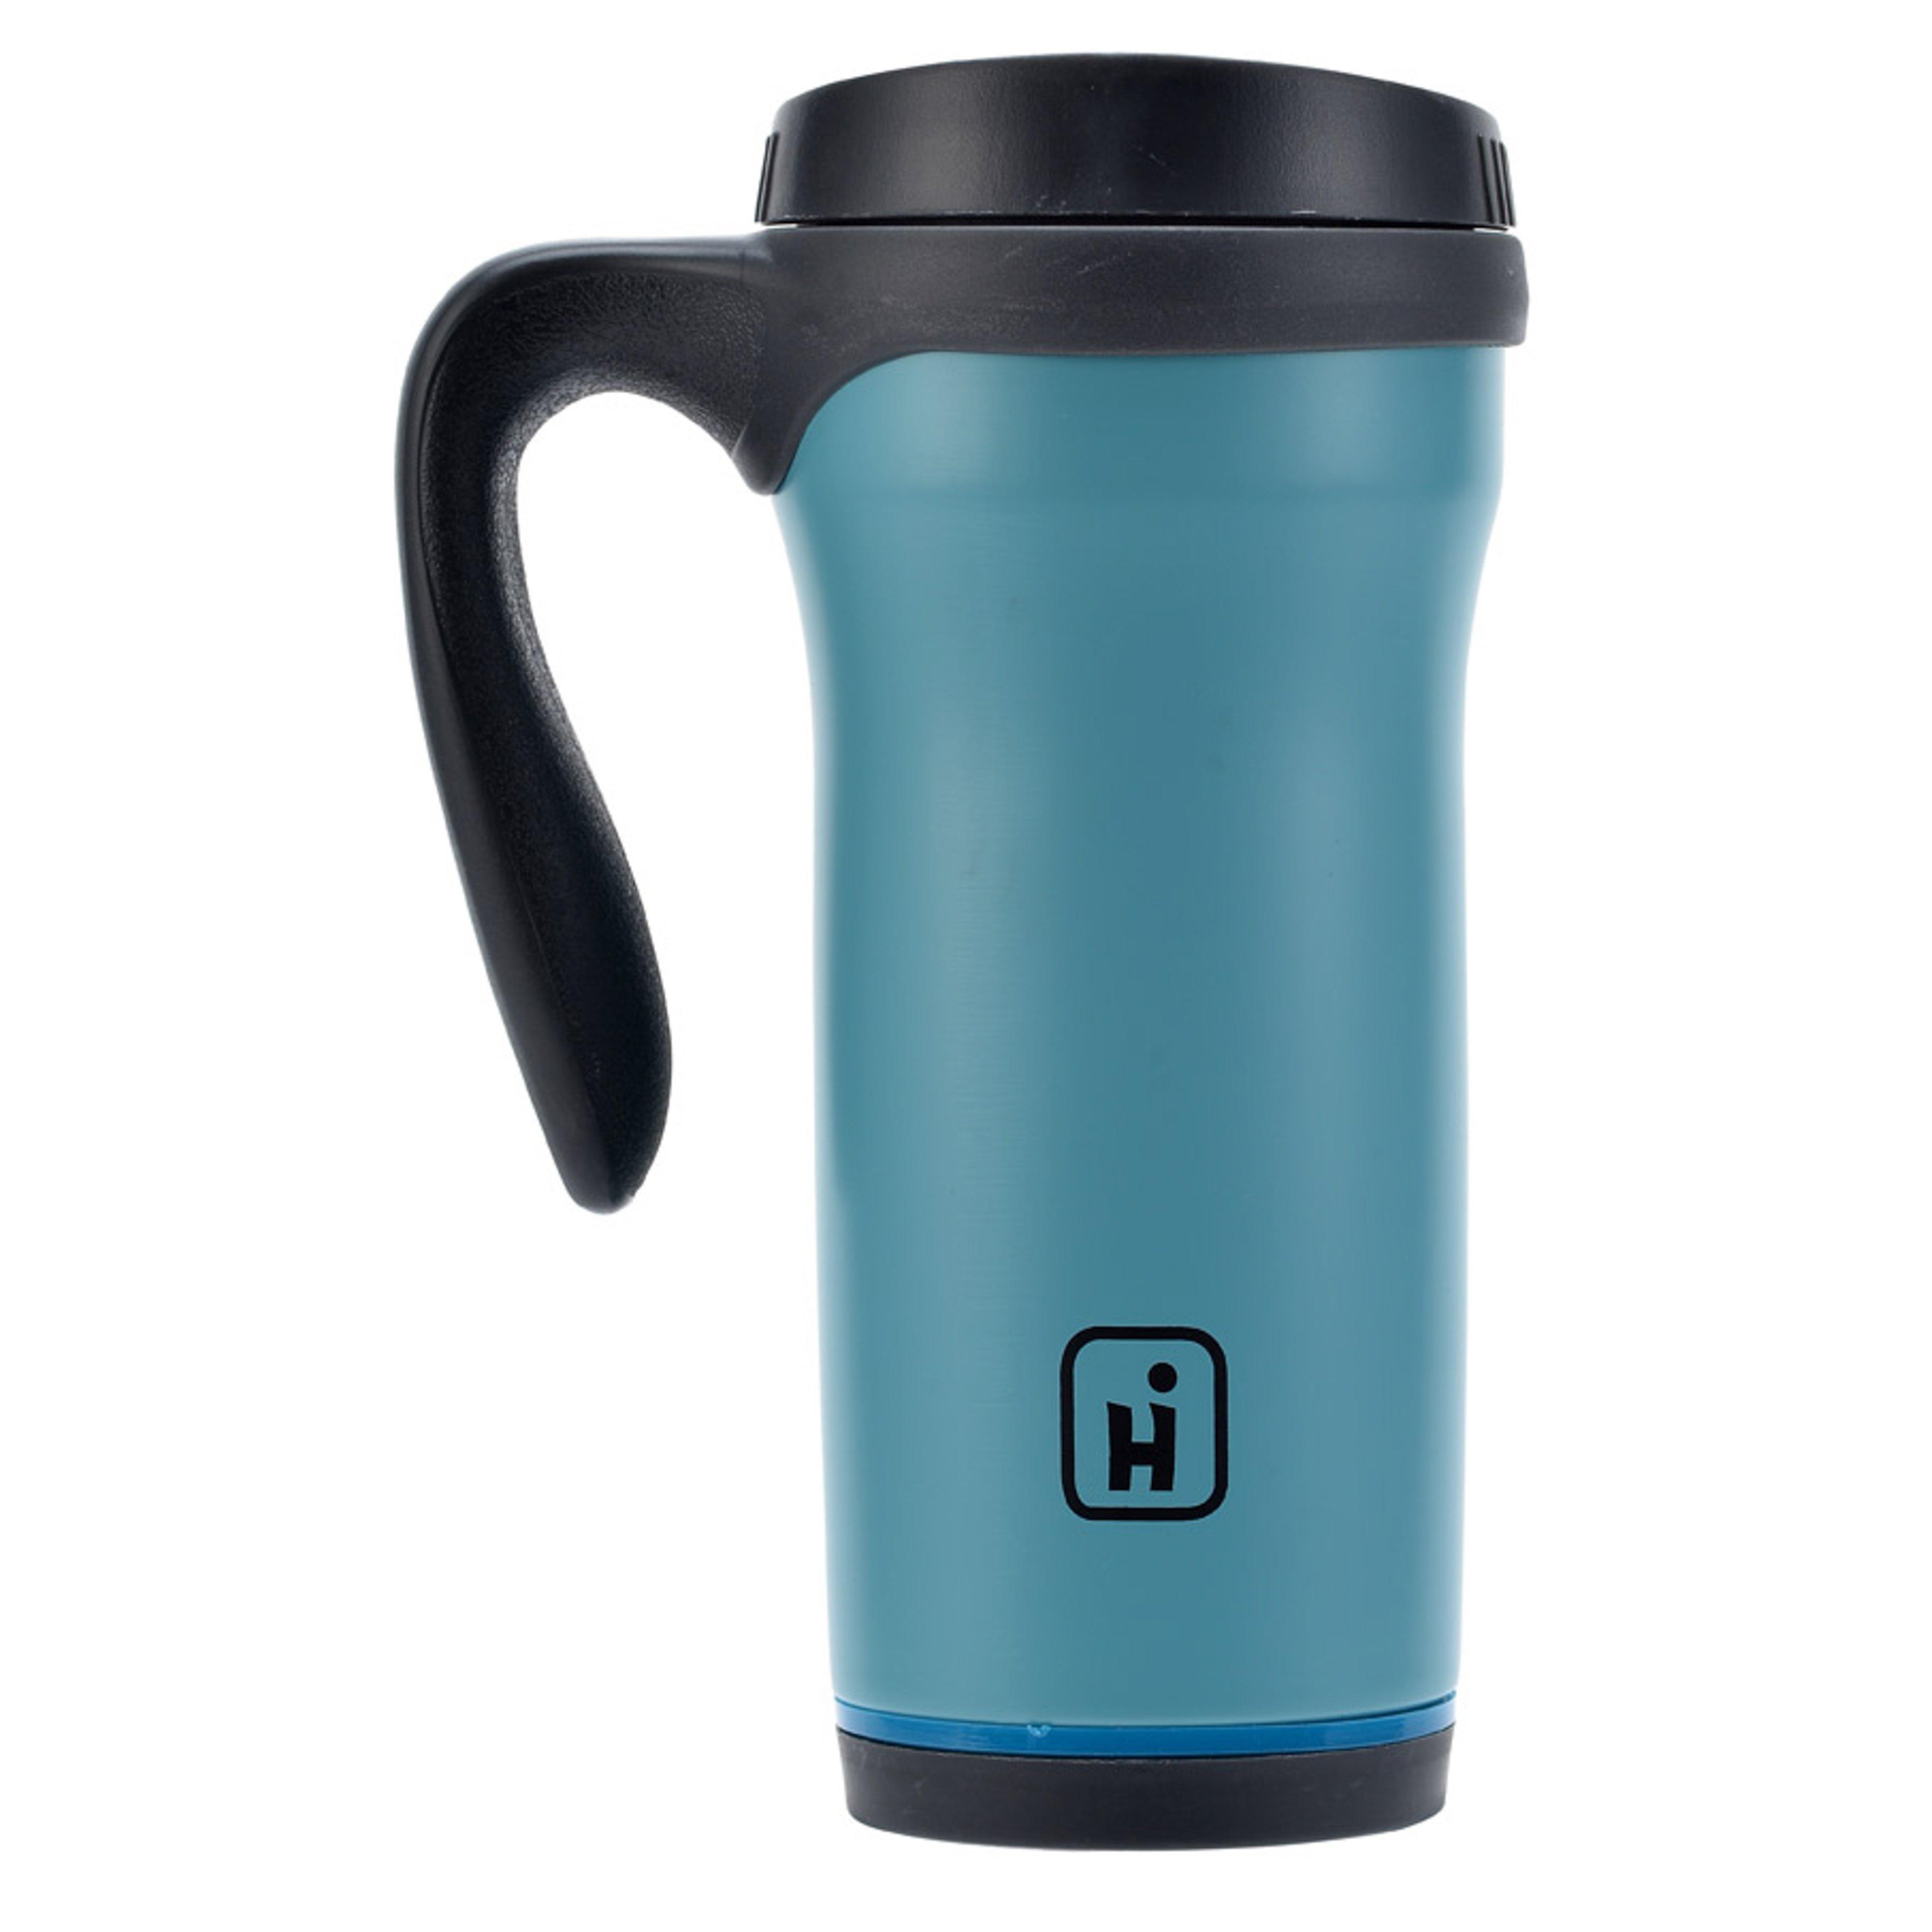 Hi-Gear Stainless Steel Mug (0.5 Litre) Review